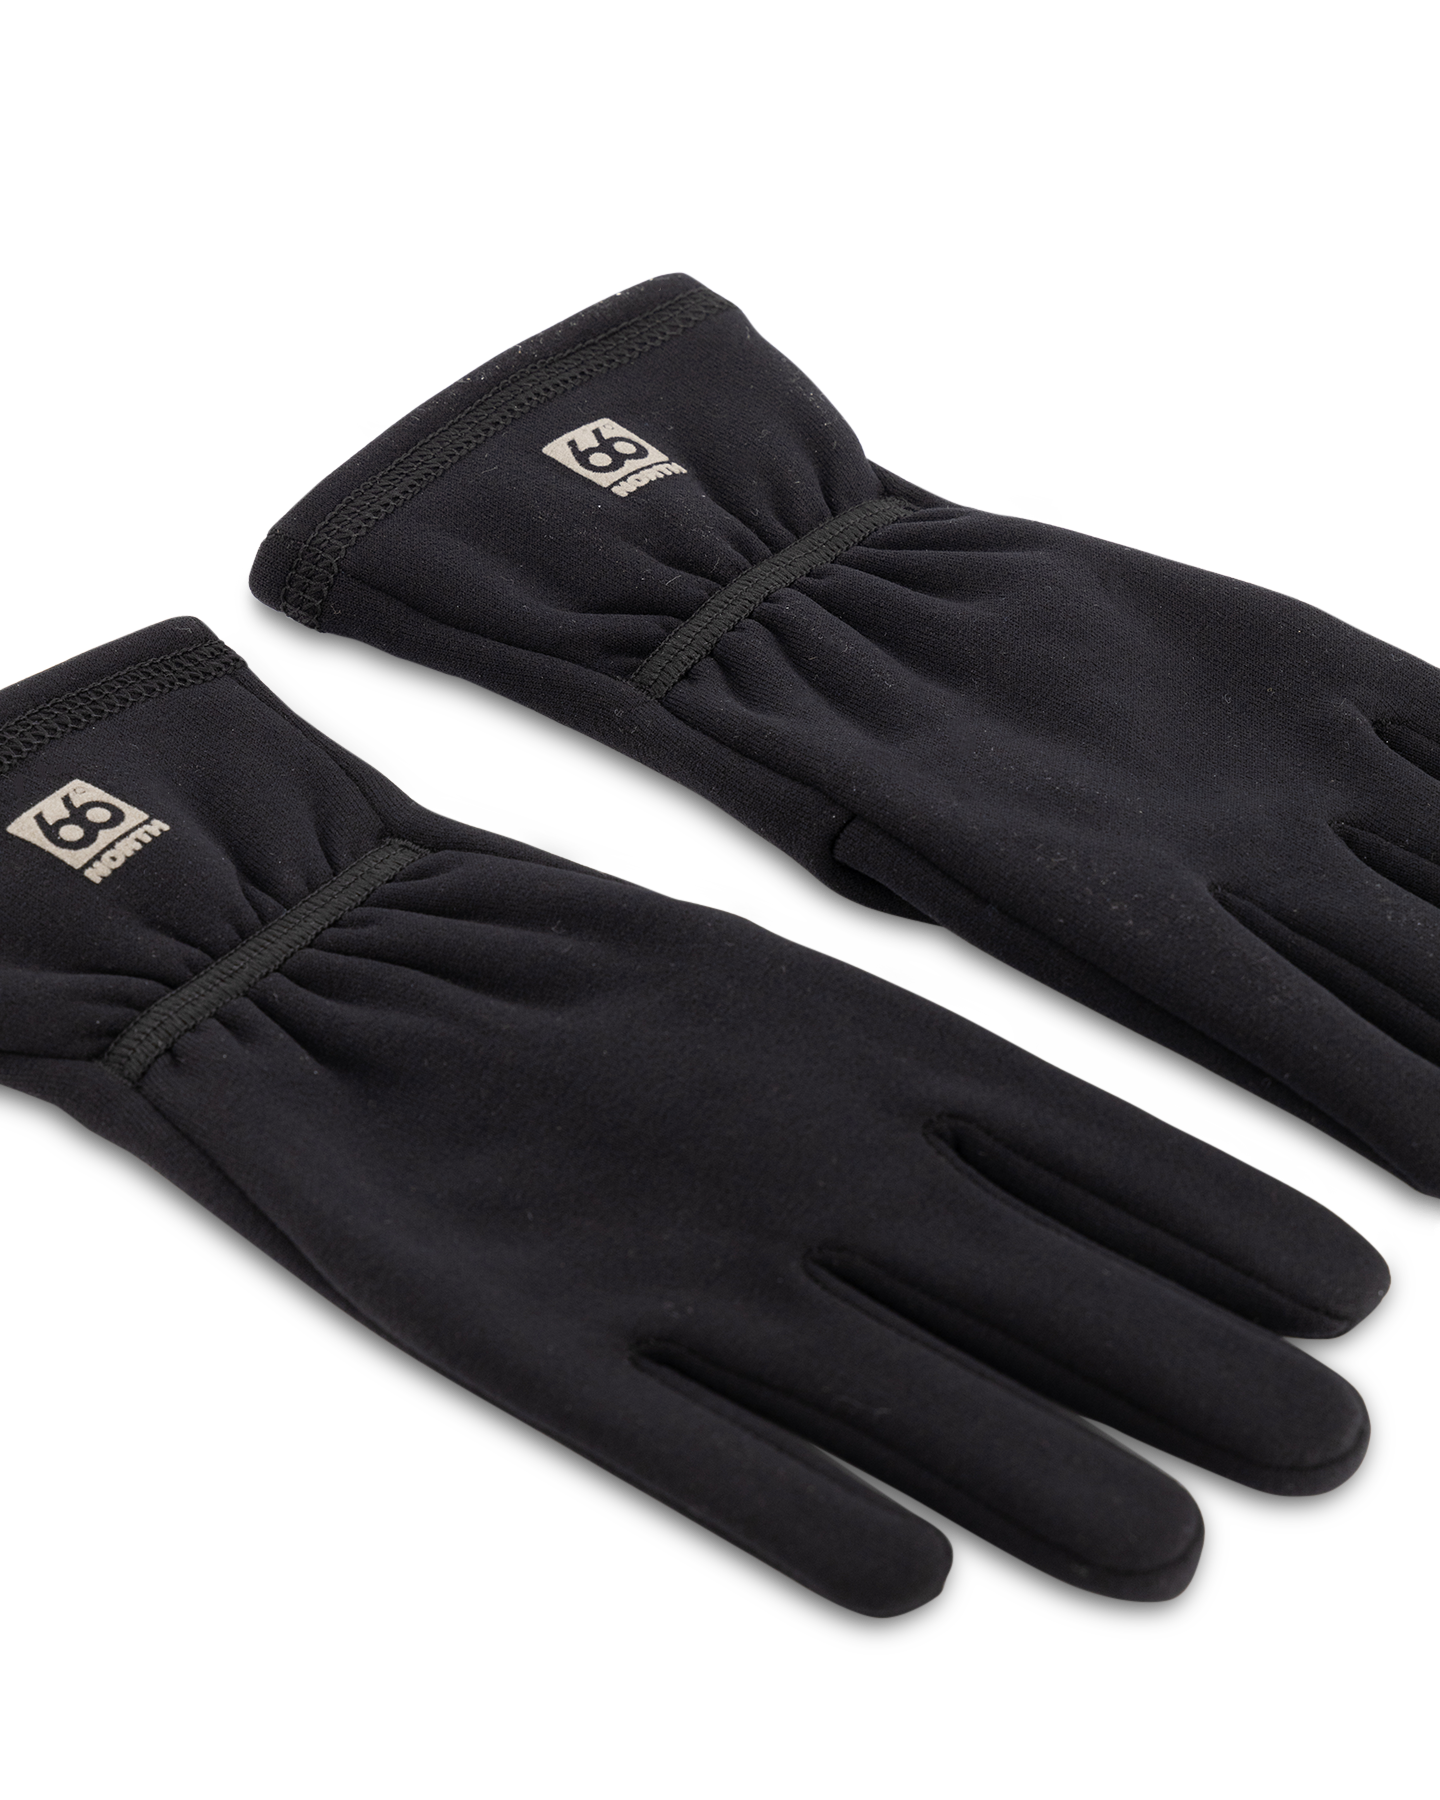 66 North Vik Gloves BLACK 2